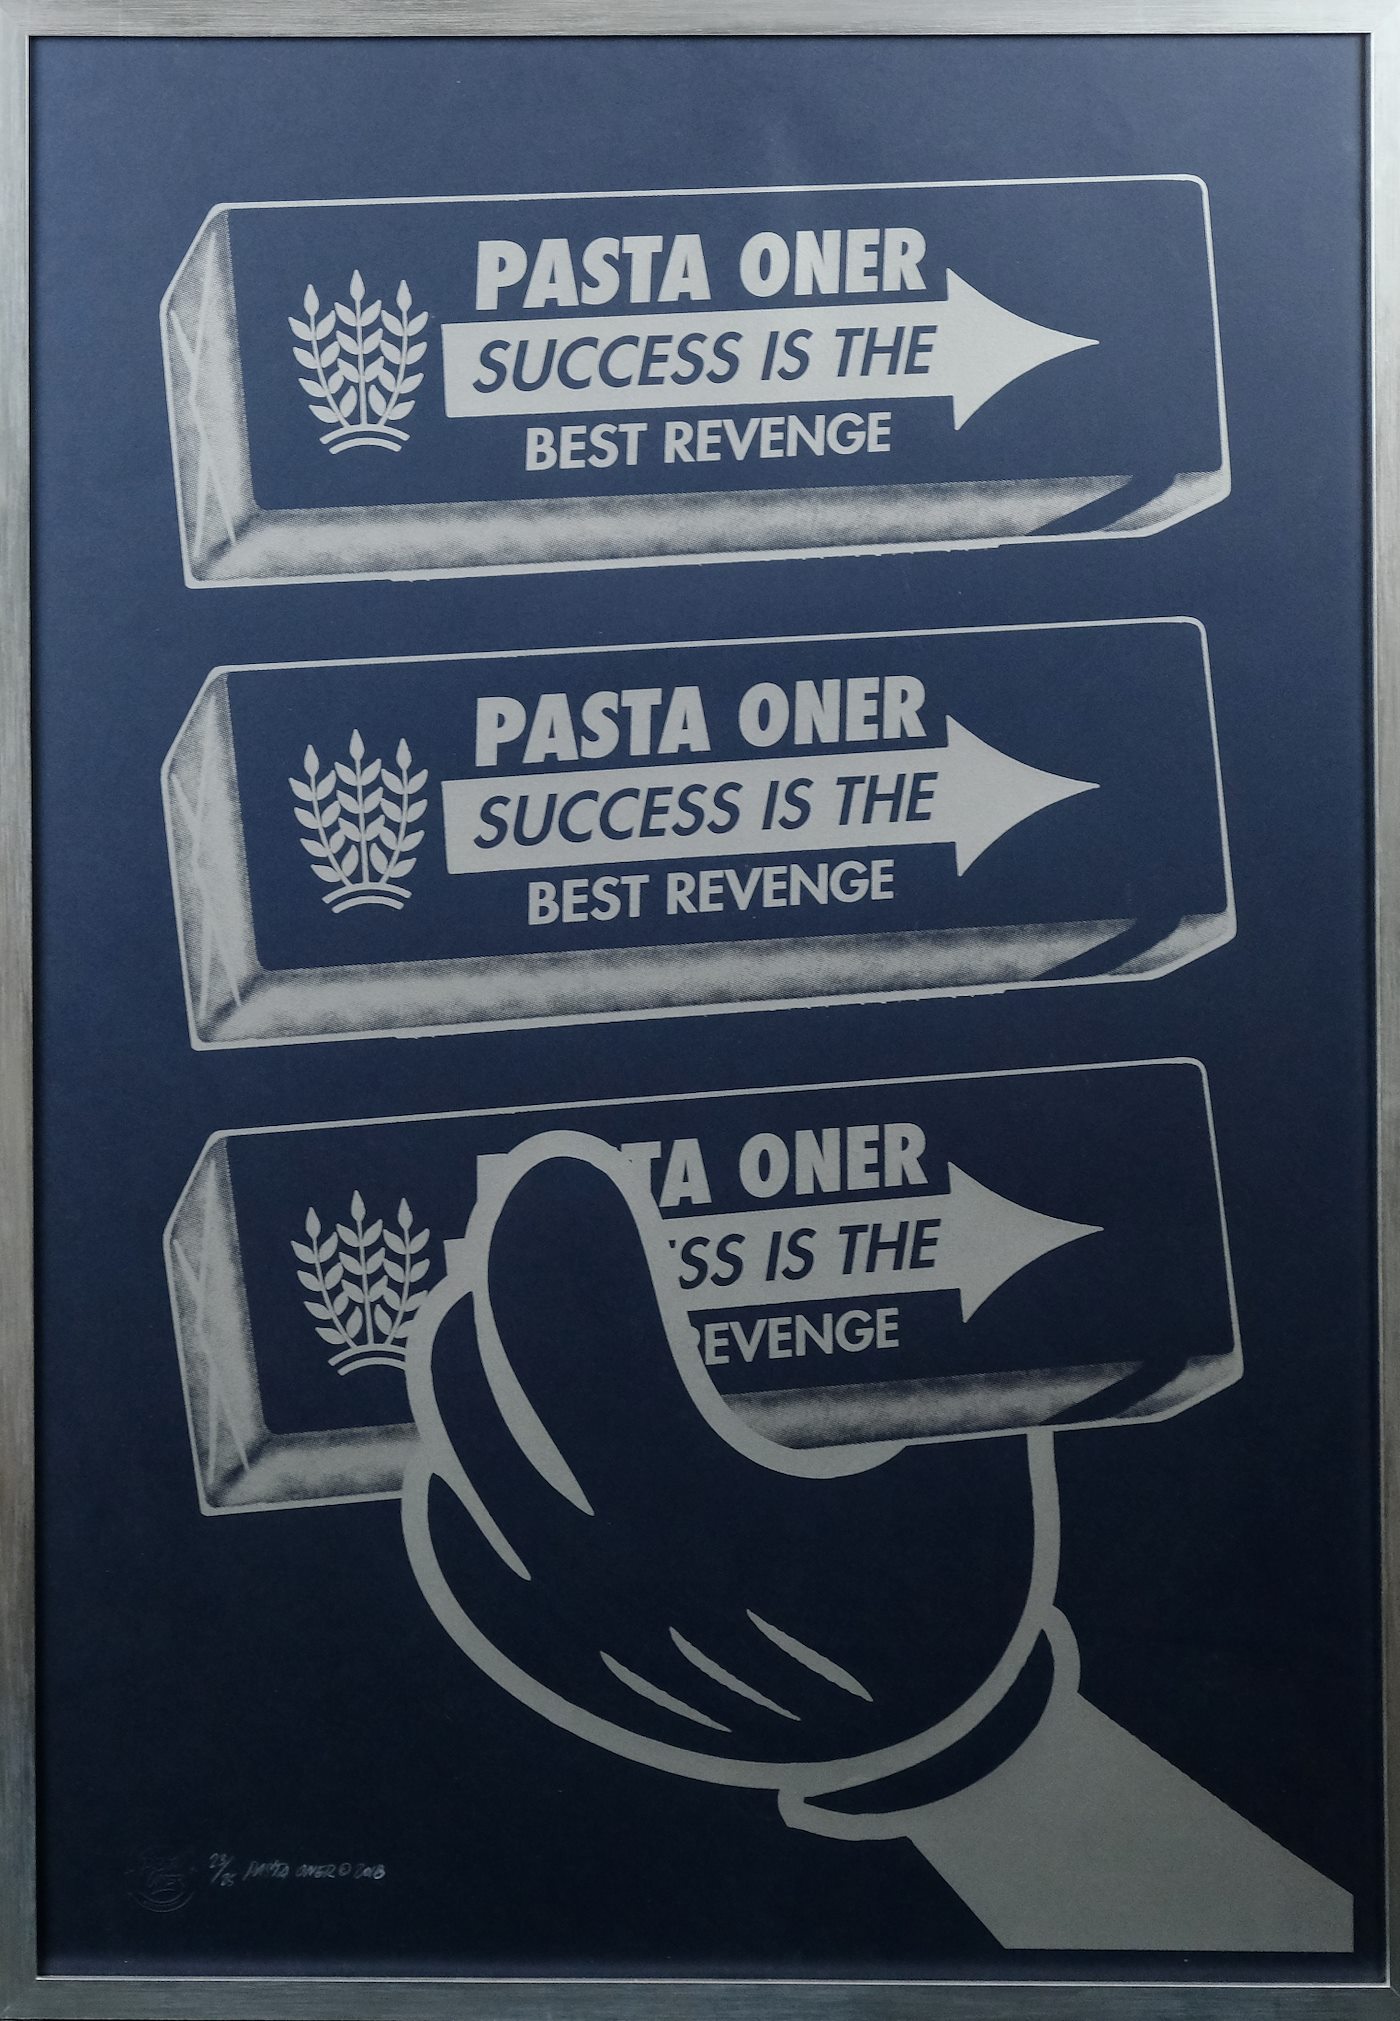 Pasta Oner - Success is the Best Revenge